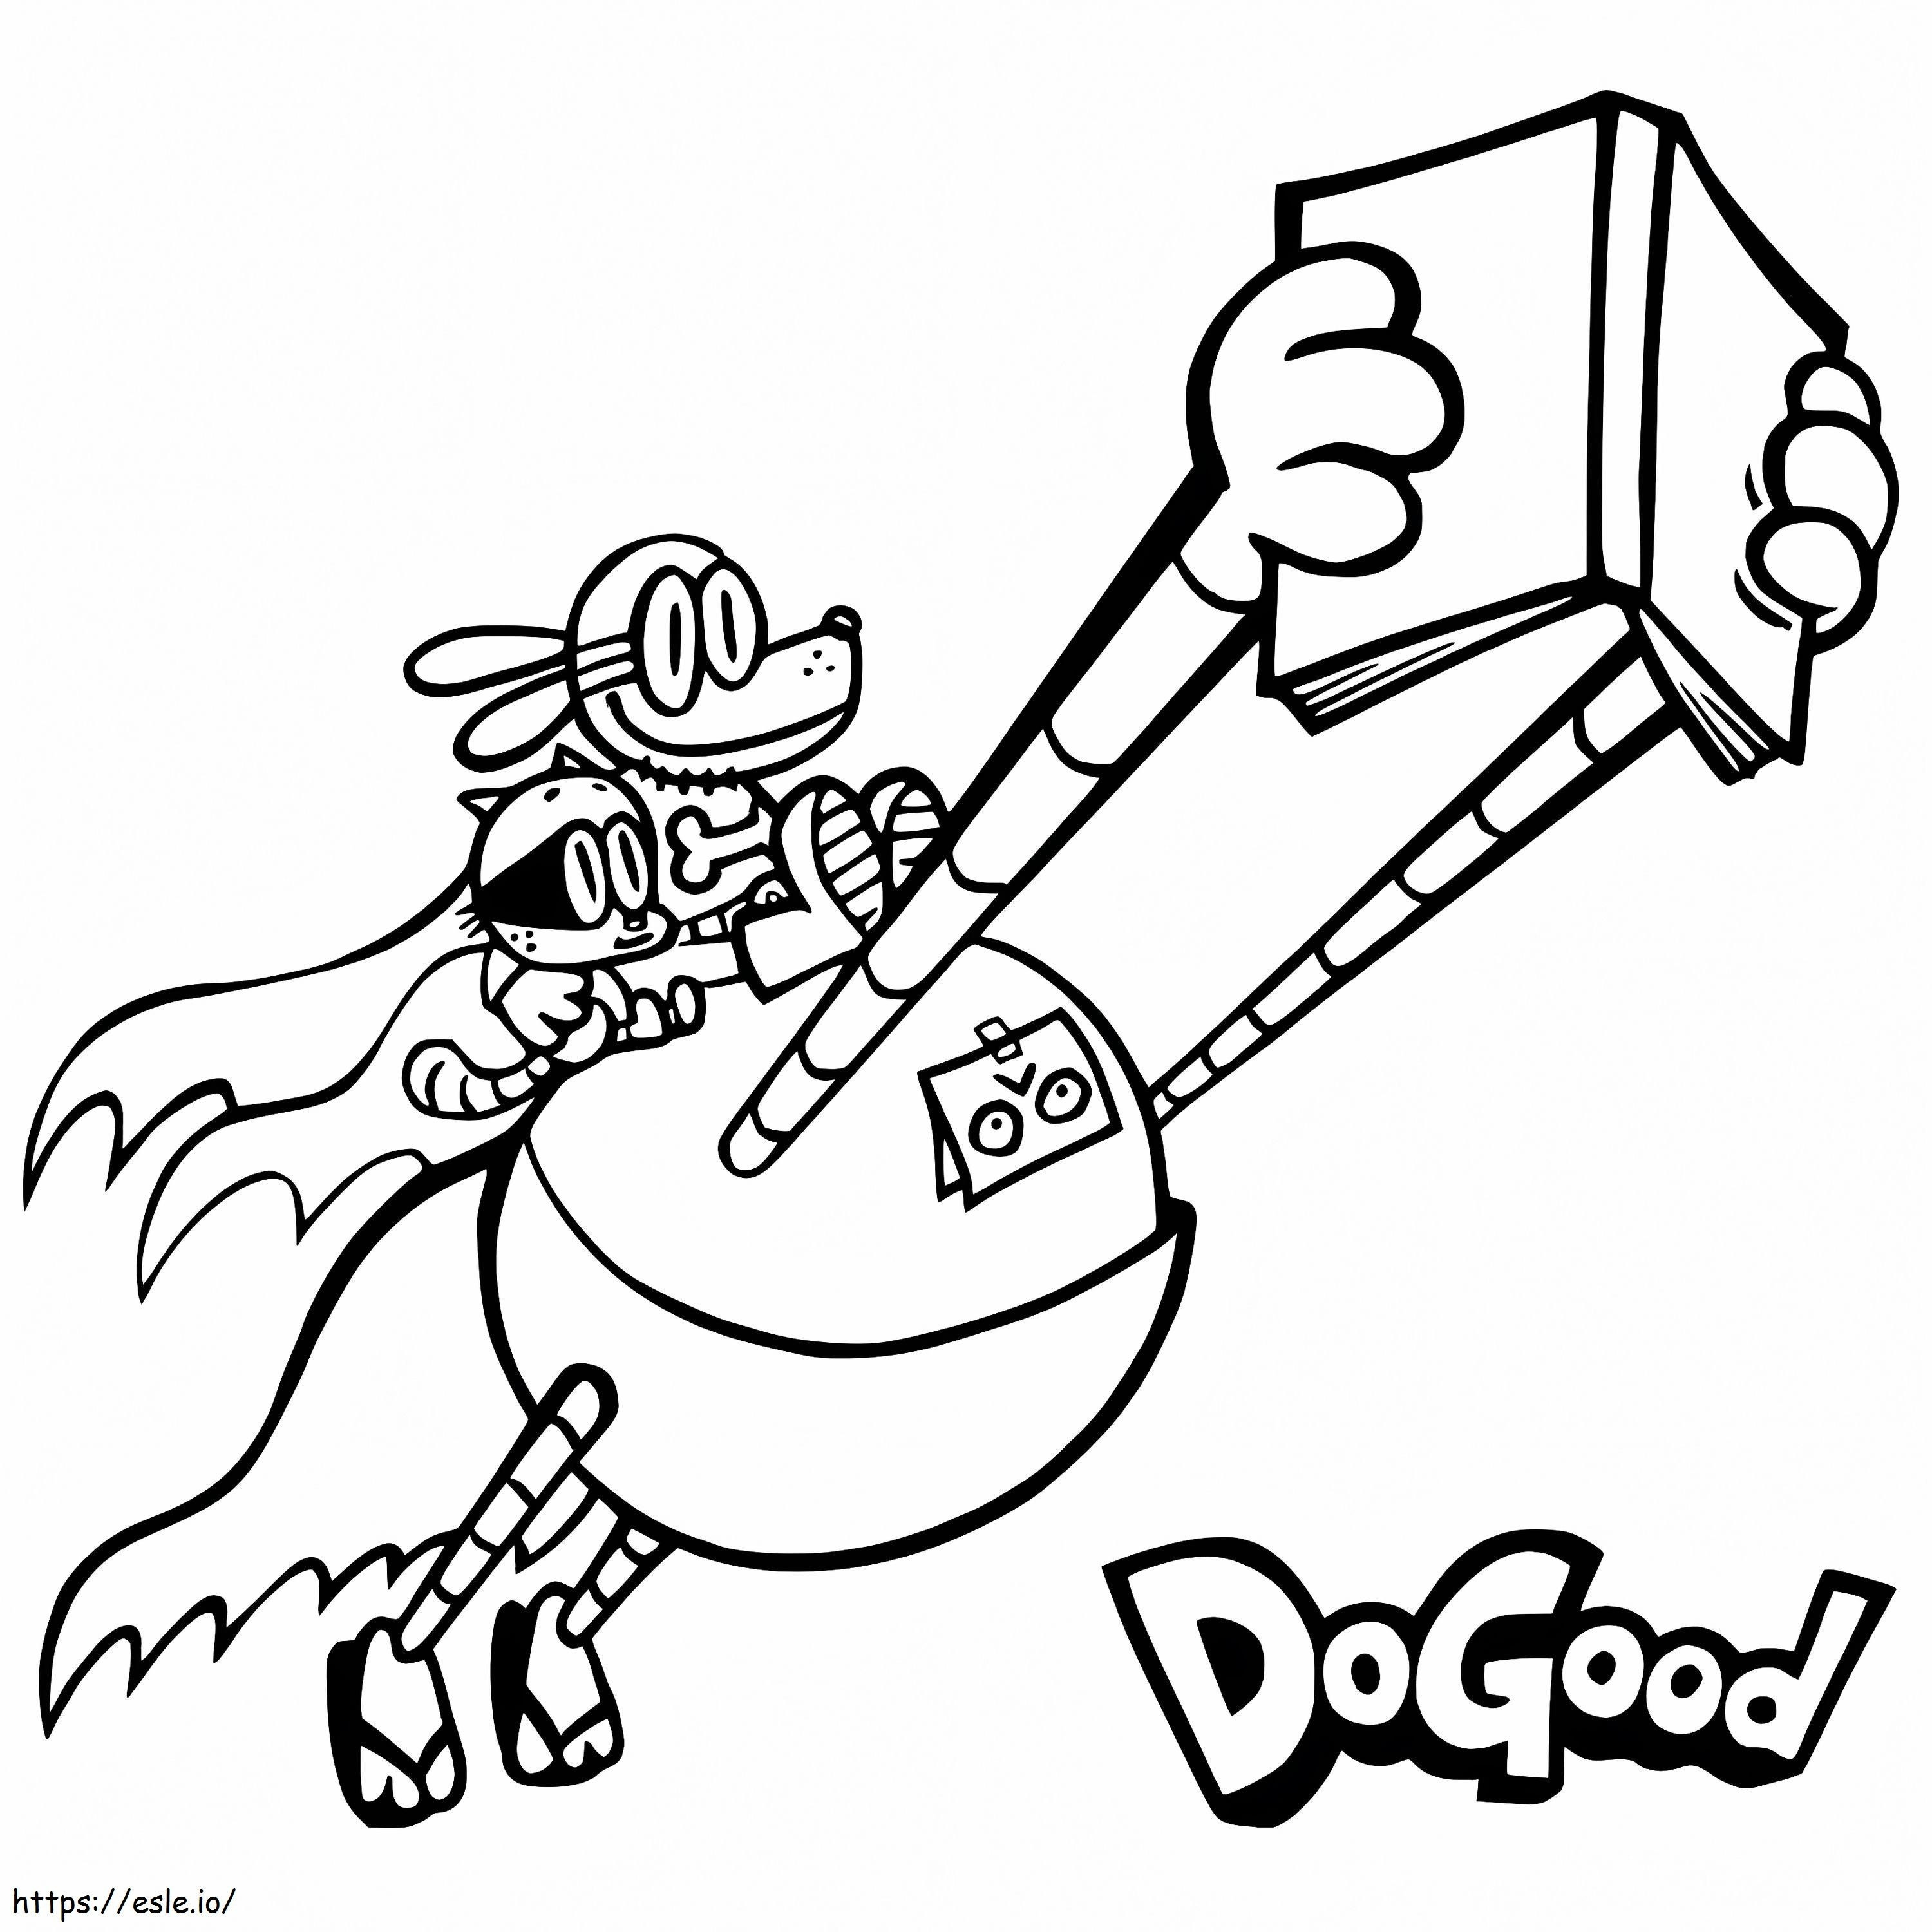 Dog Man 2 coloring page